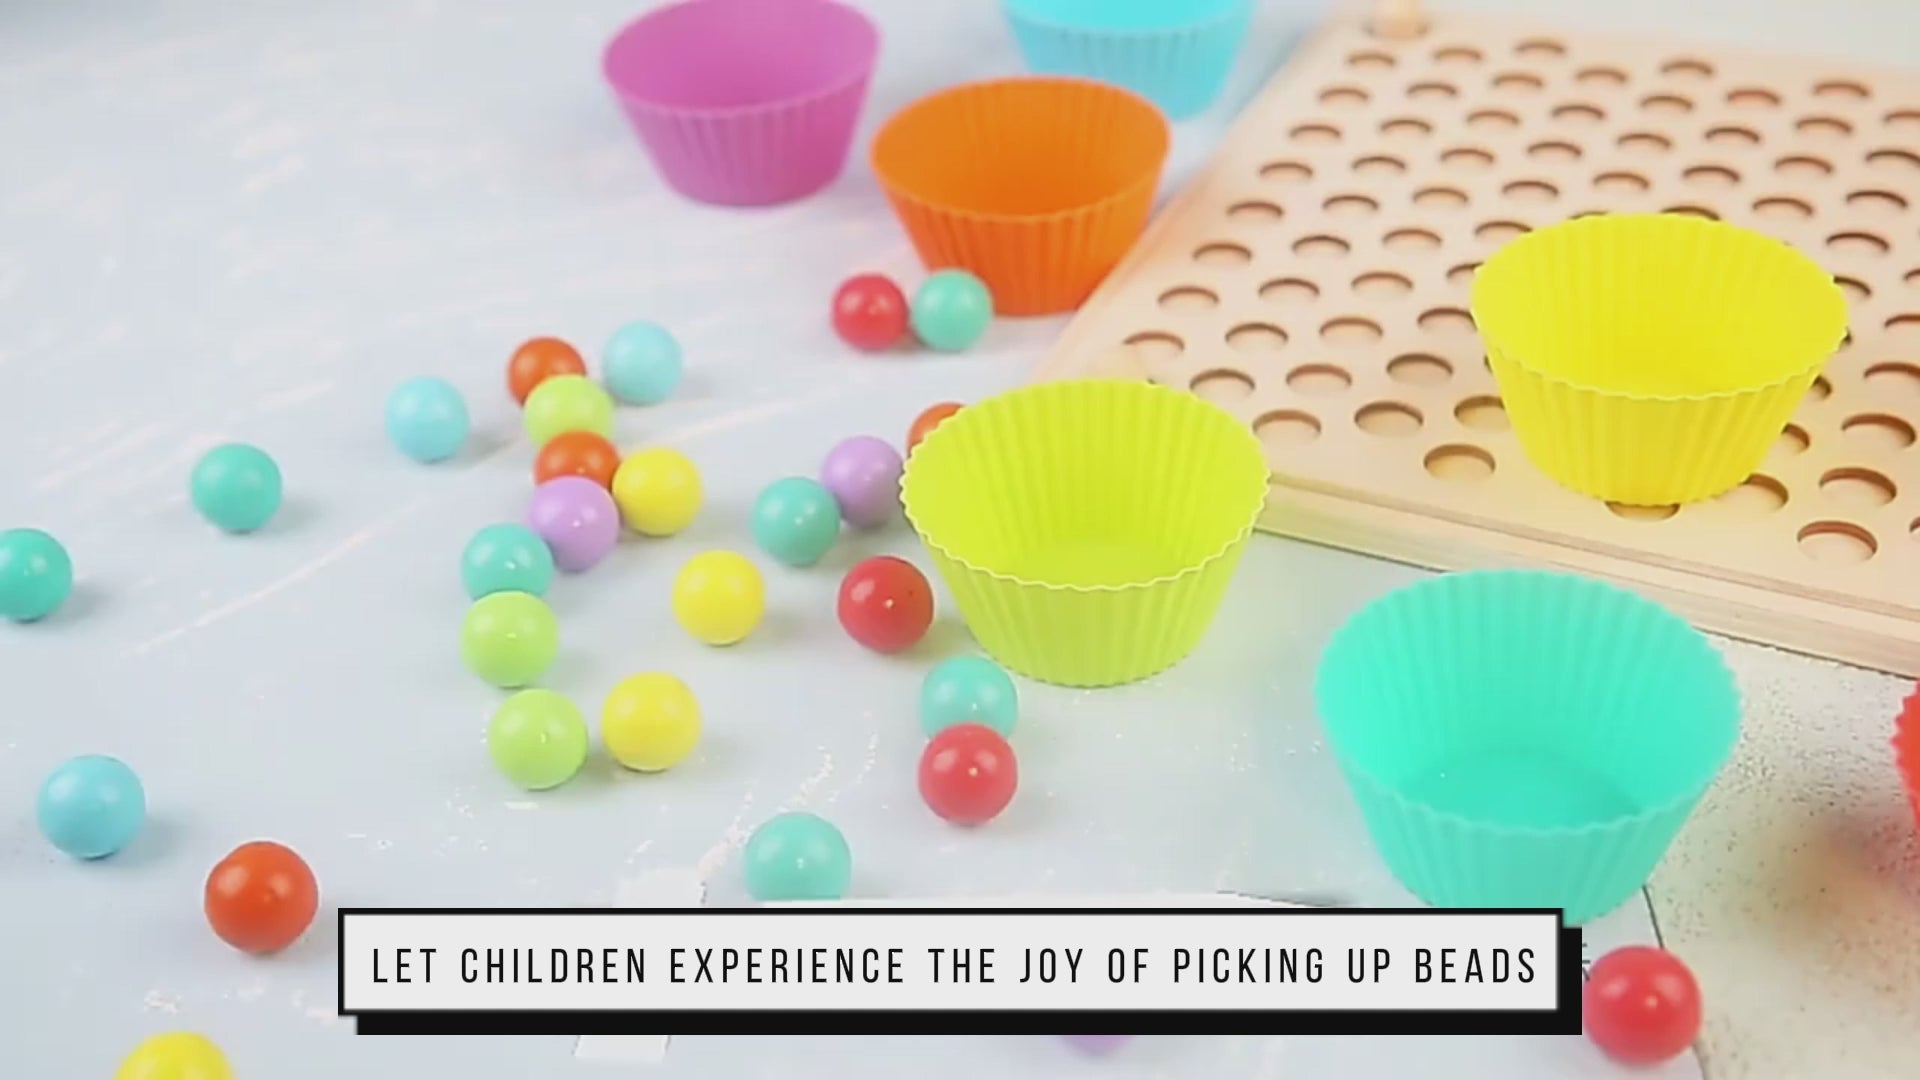 Wooden Beads Toy for Kids -  تصنيف الخرز بالملقاط